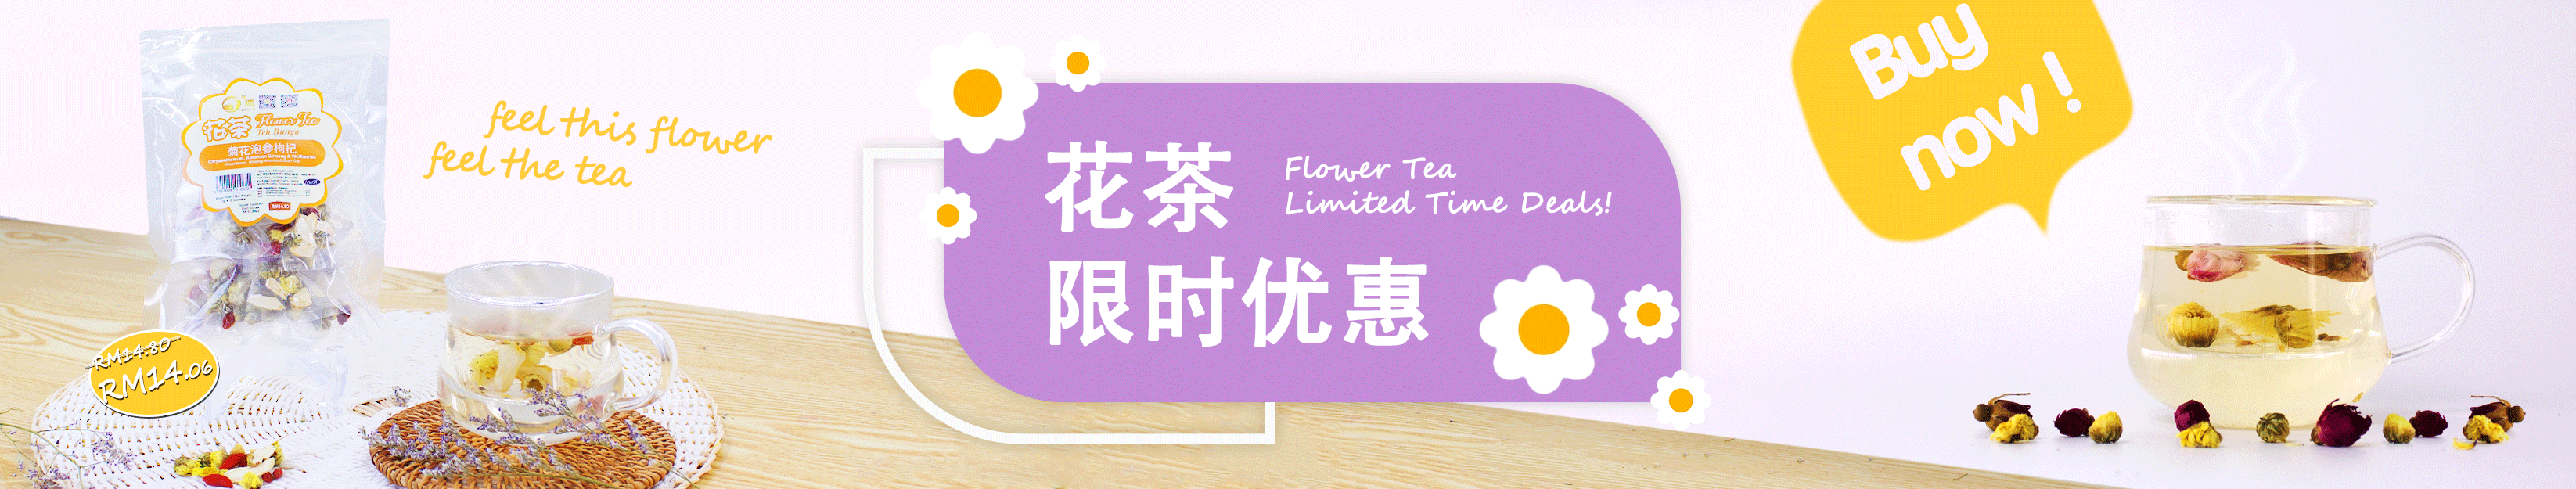 Flower Tea Offer RB Hamper